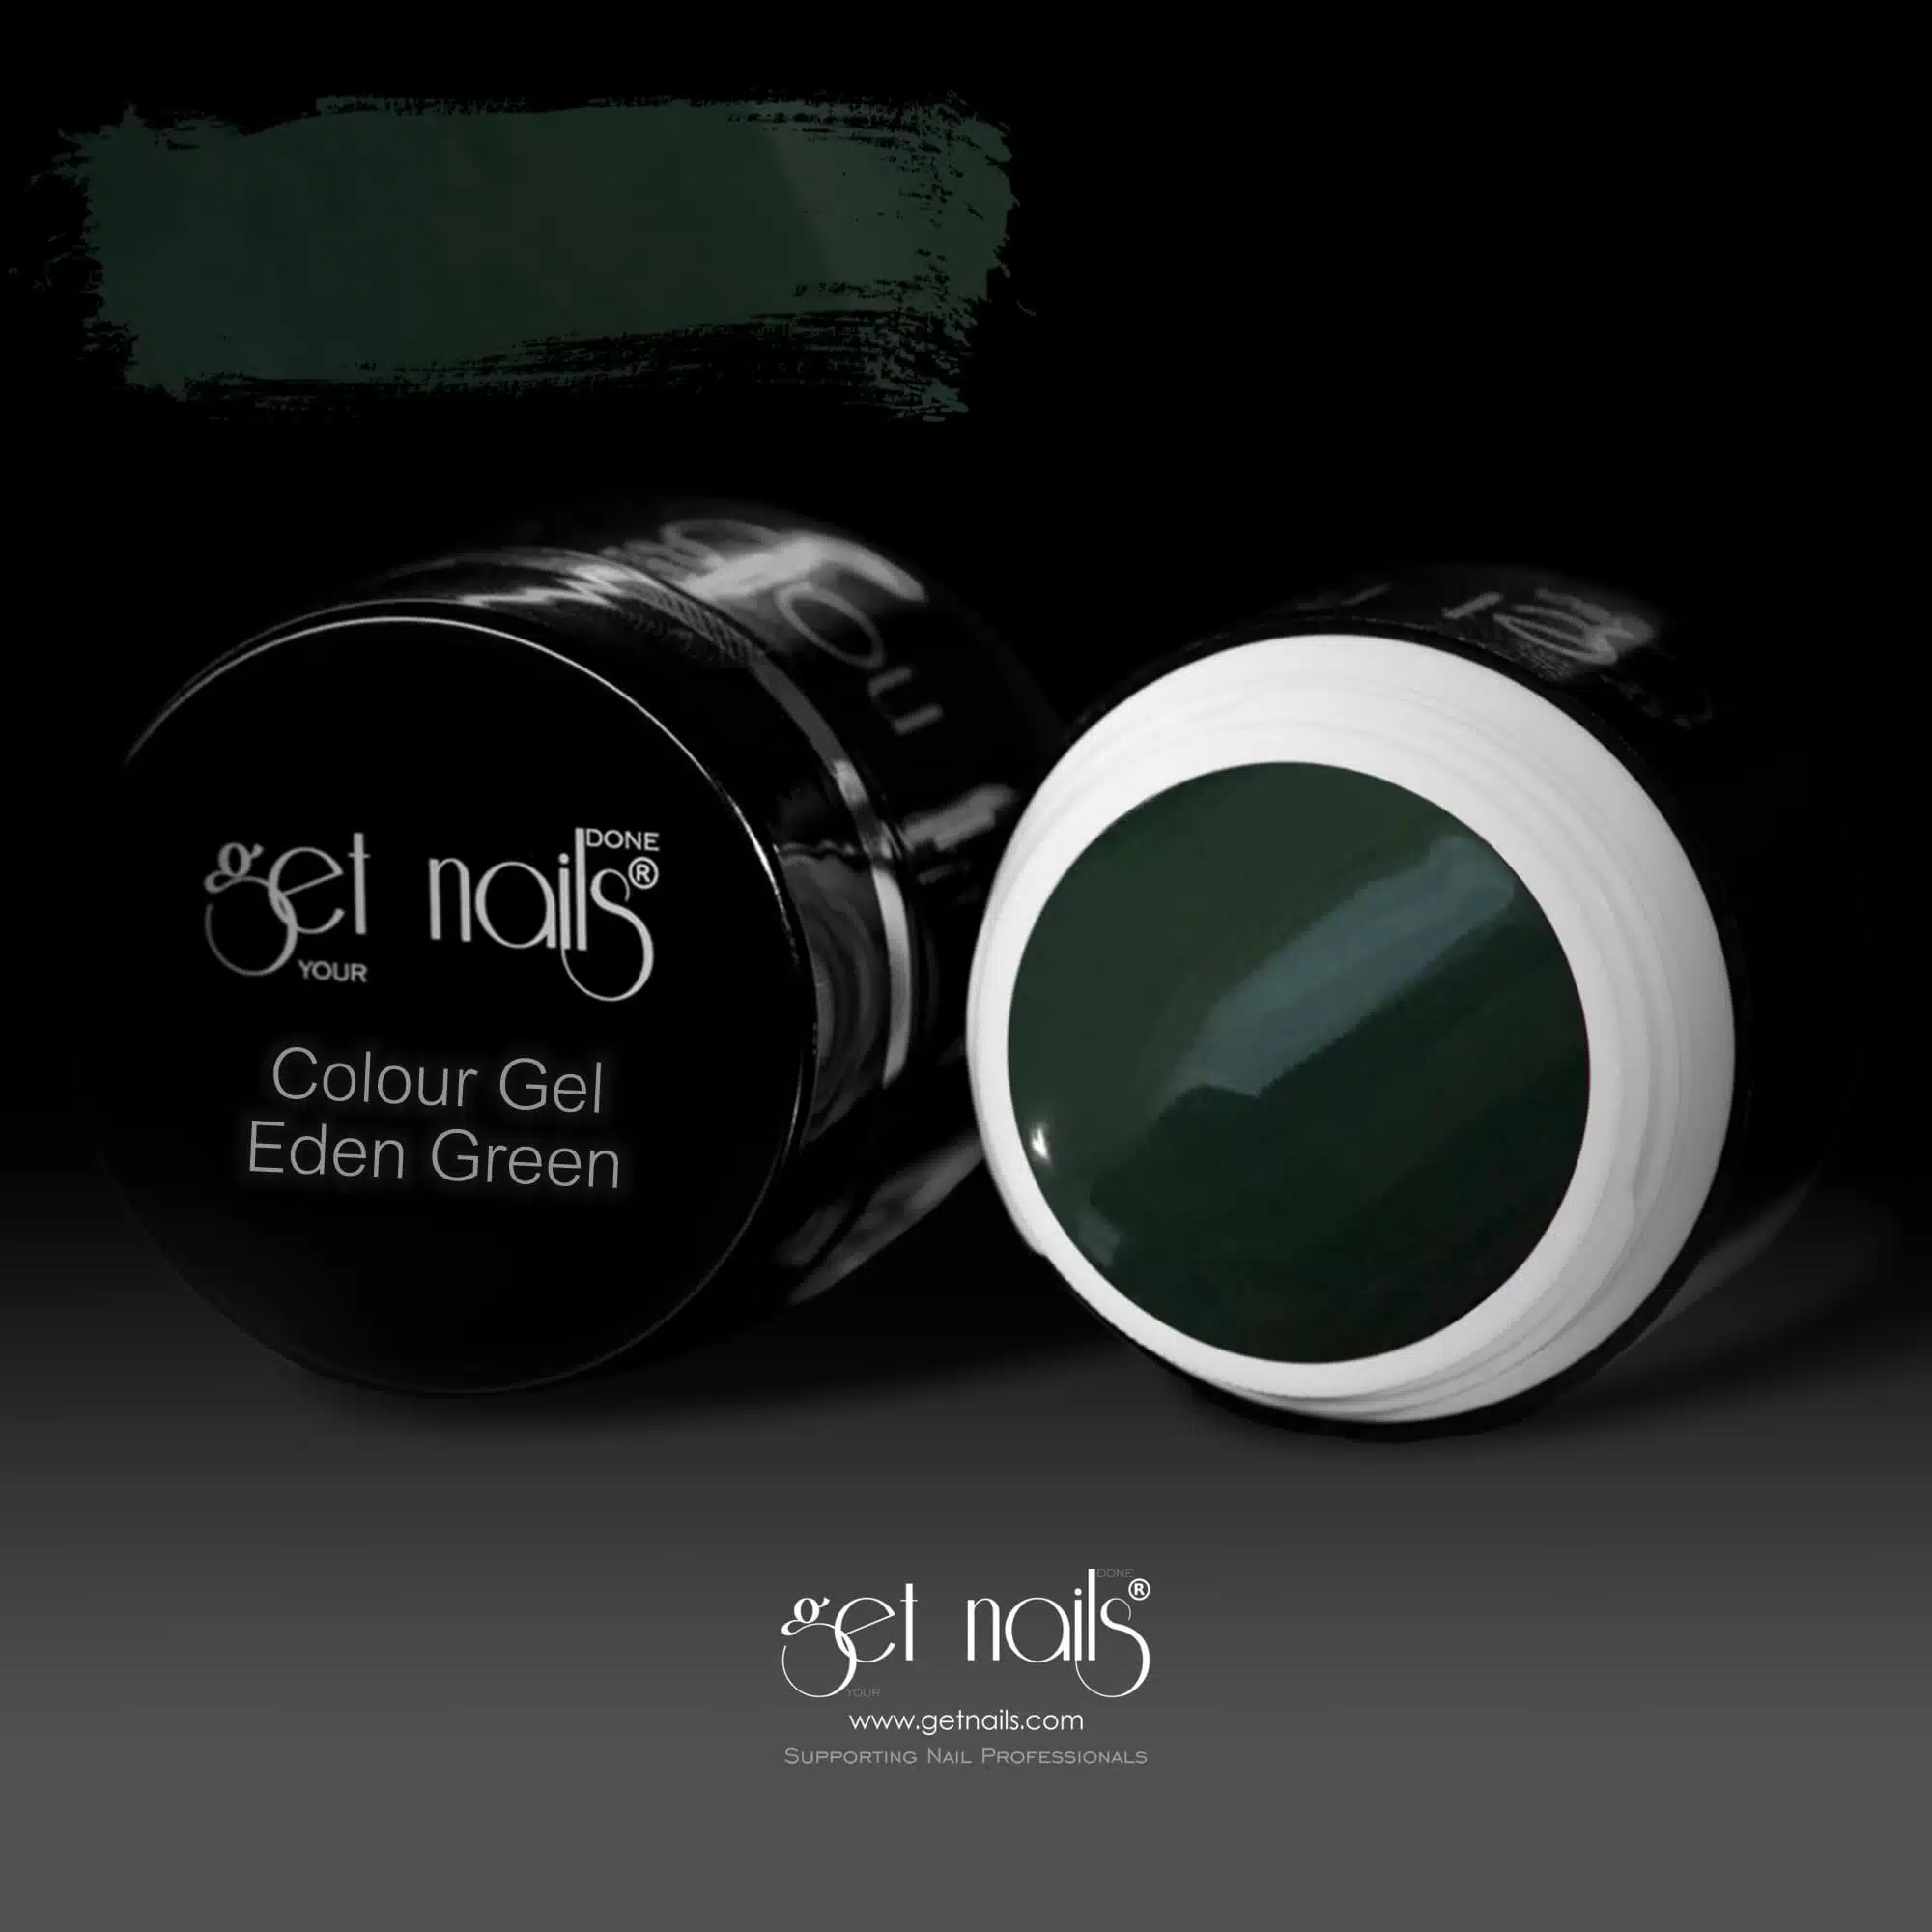 Get Nails Austria - Цветной гель Eden Green 5g